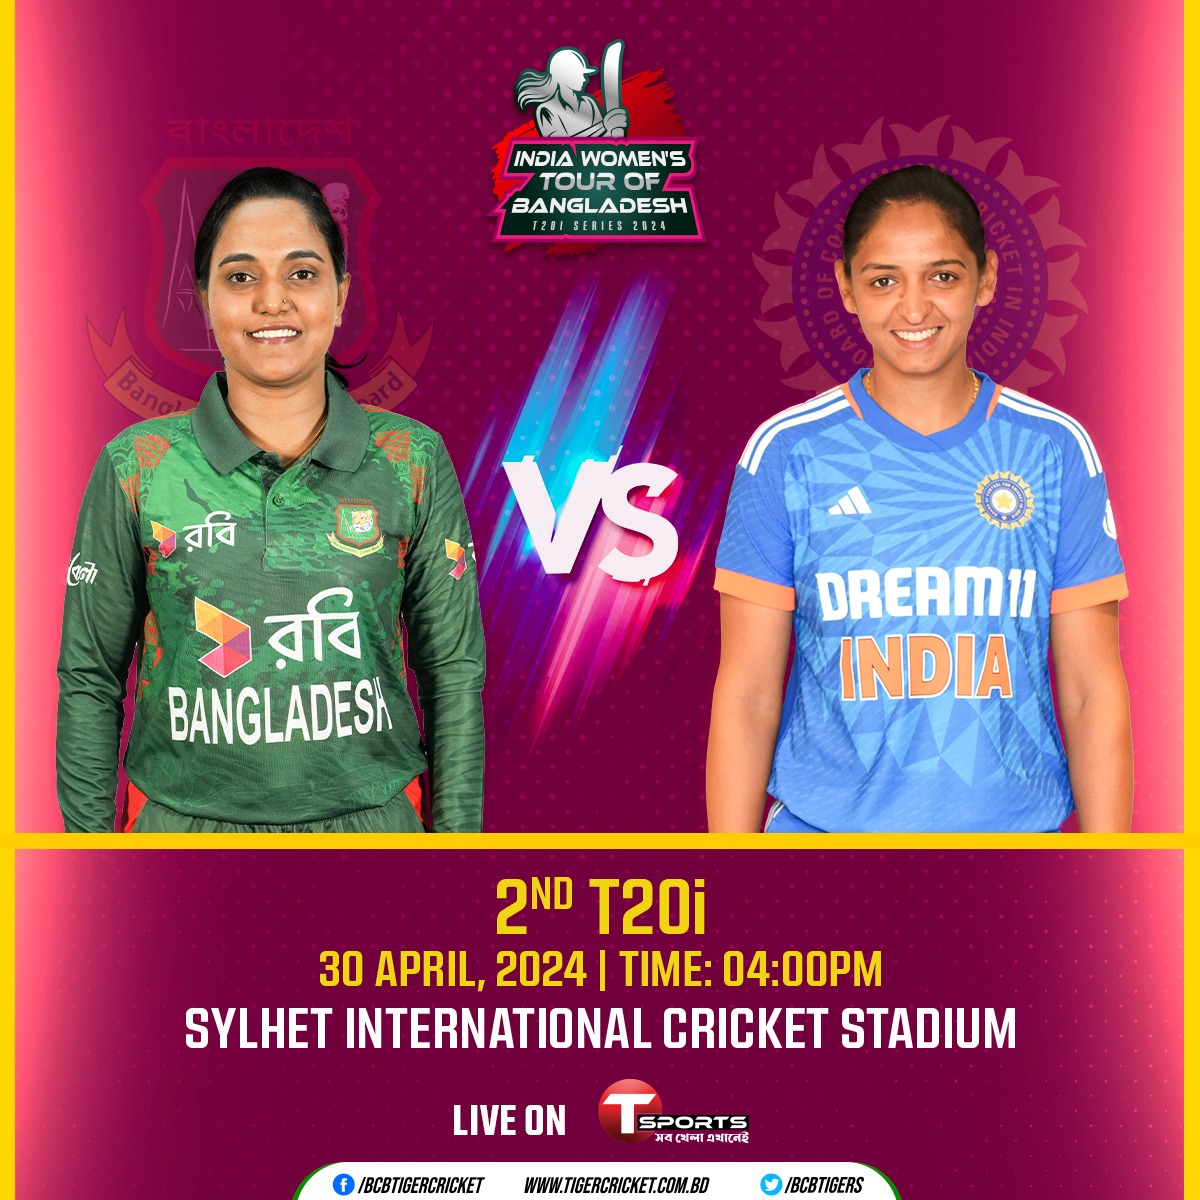 India Women’s Team Tour of Bangladesh 2024
Bangladesh vs India | 2nd T20i | 30 April 2024 | Time: 04:00 pm

Details 👉: tigercricket.com.bd/live-score/ind…

#BCB #Cricket #BANWvINDW #LiveCrcket #HomeSeries #T20Iseries #womenscricket